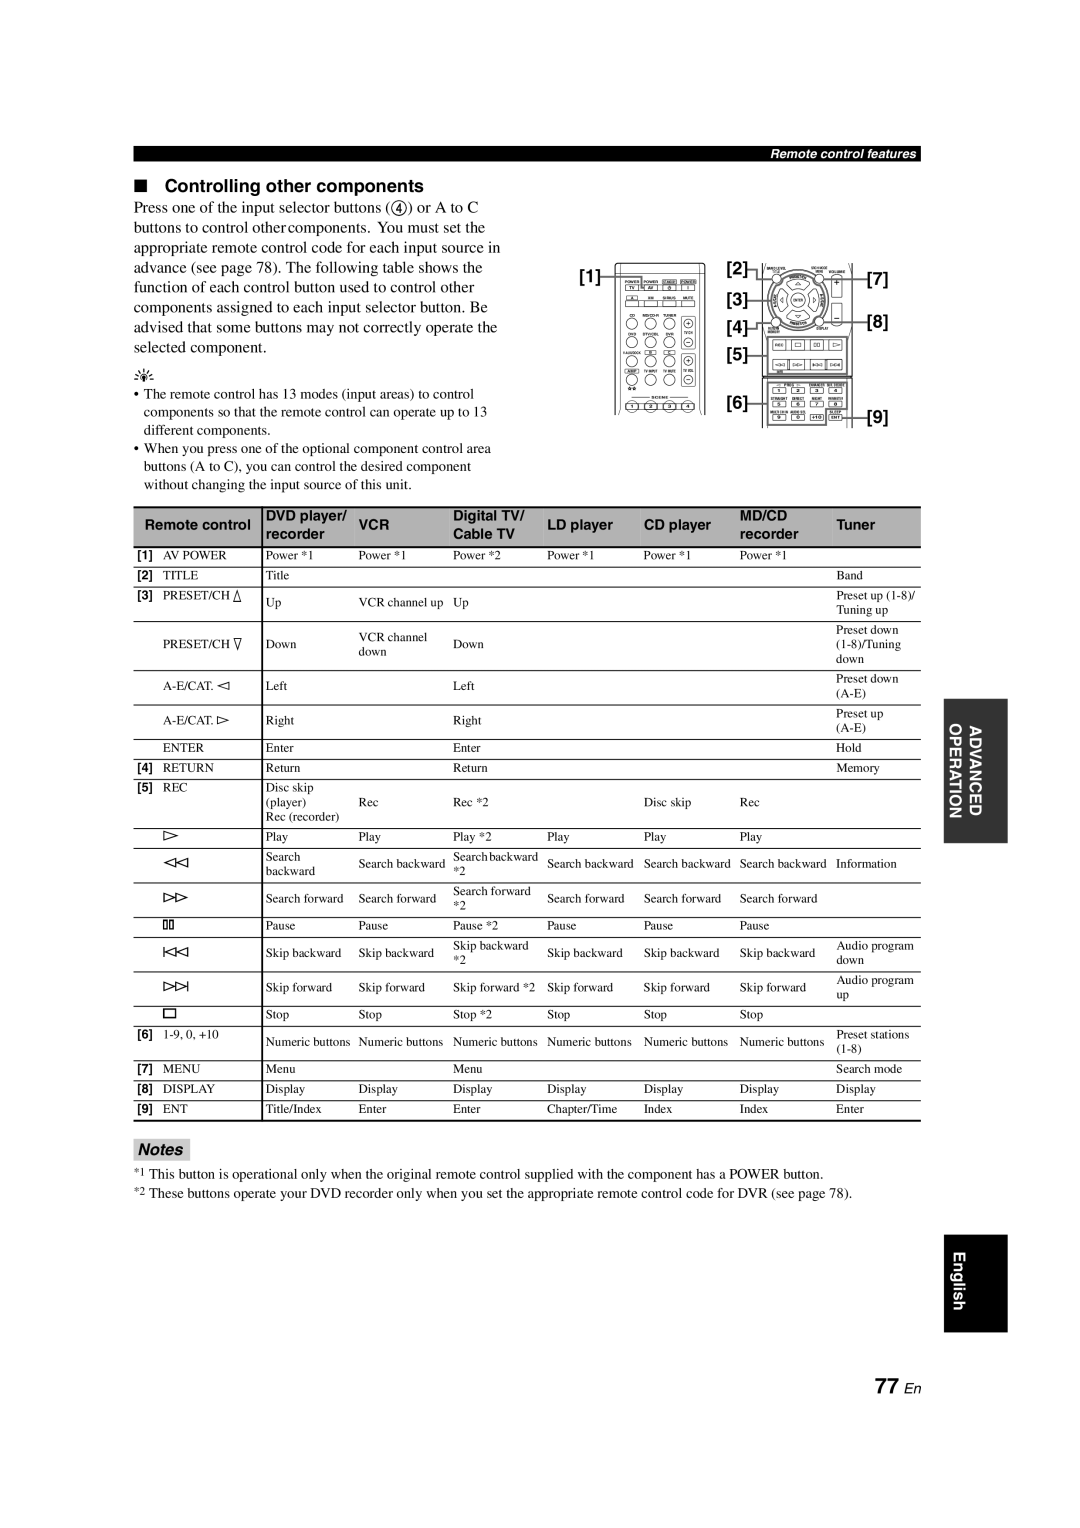 Yamaha HTR-6150 owner manual 77 En, Controlling other components 